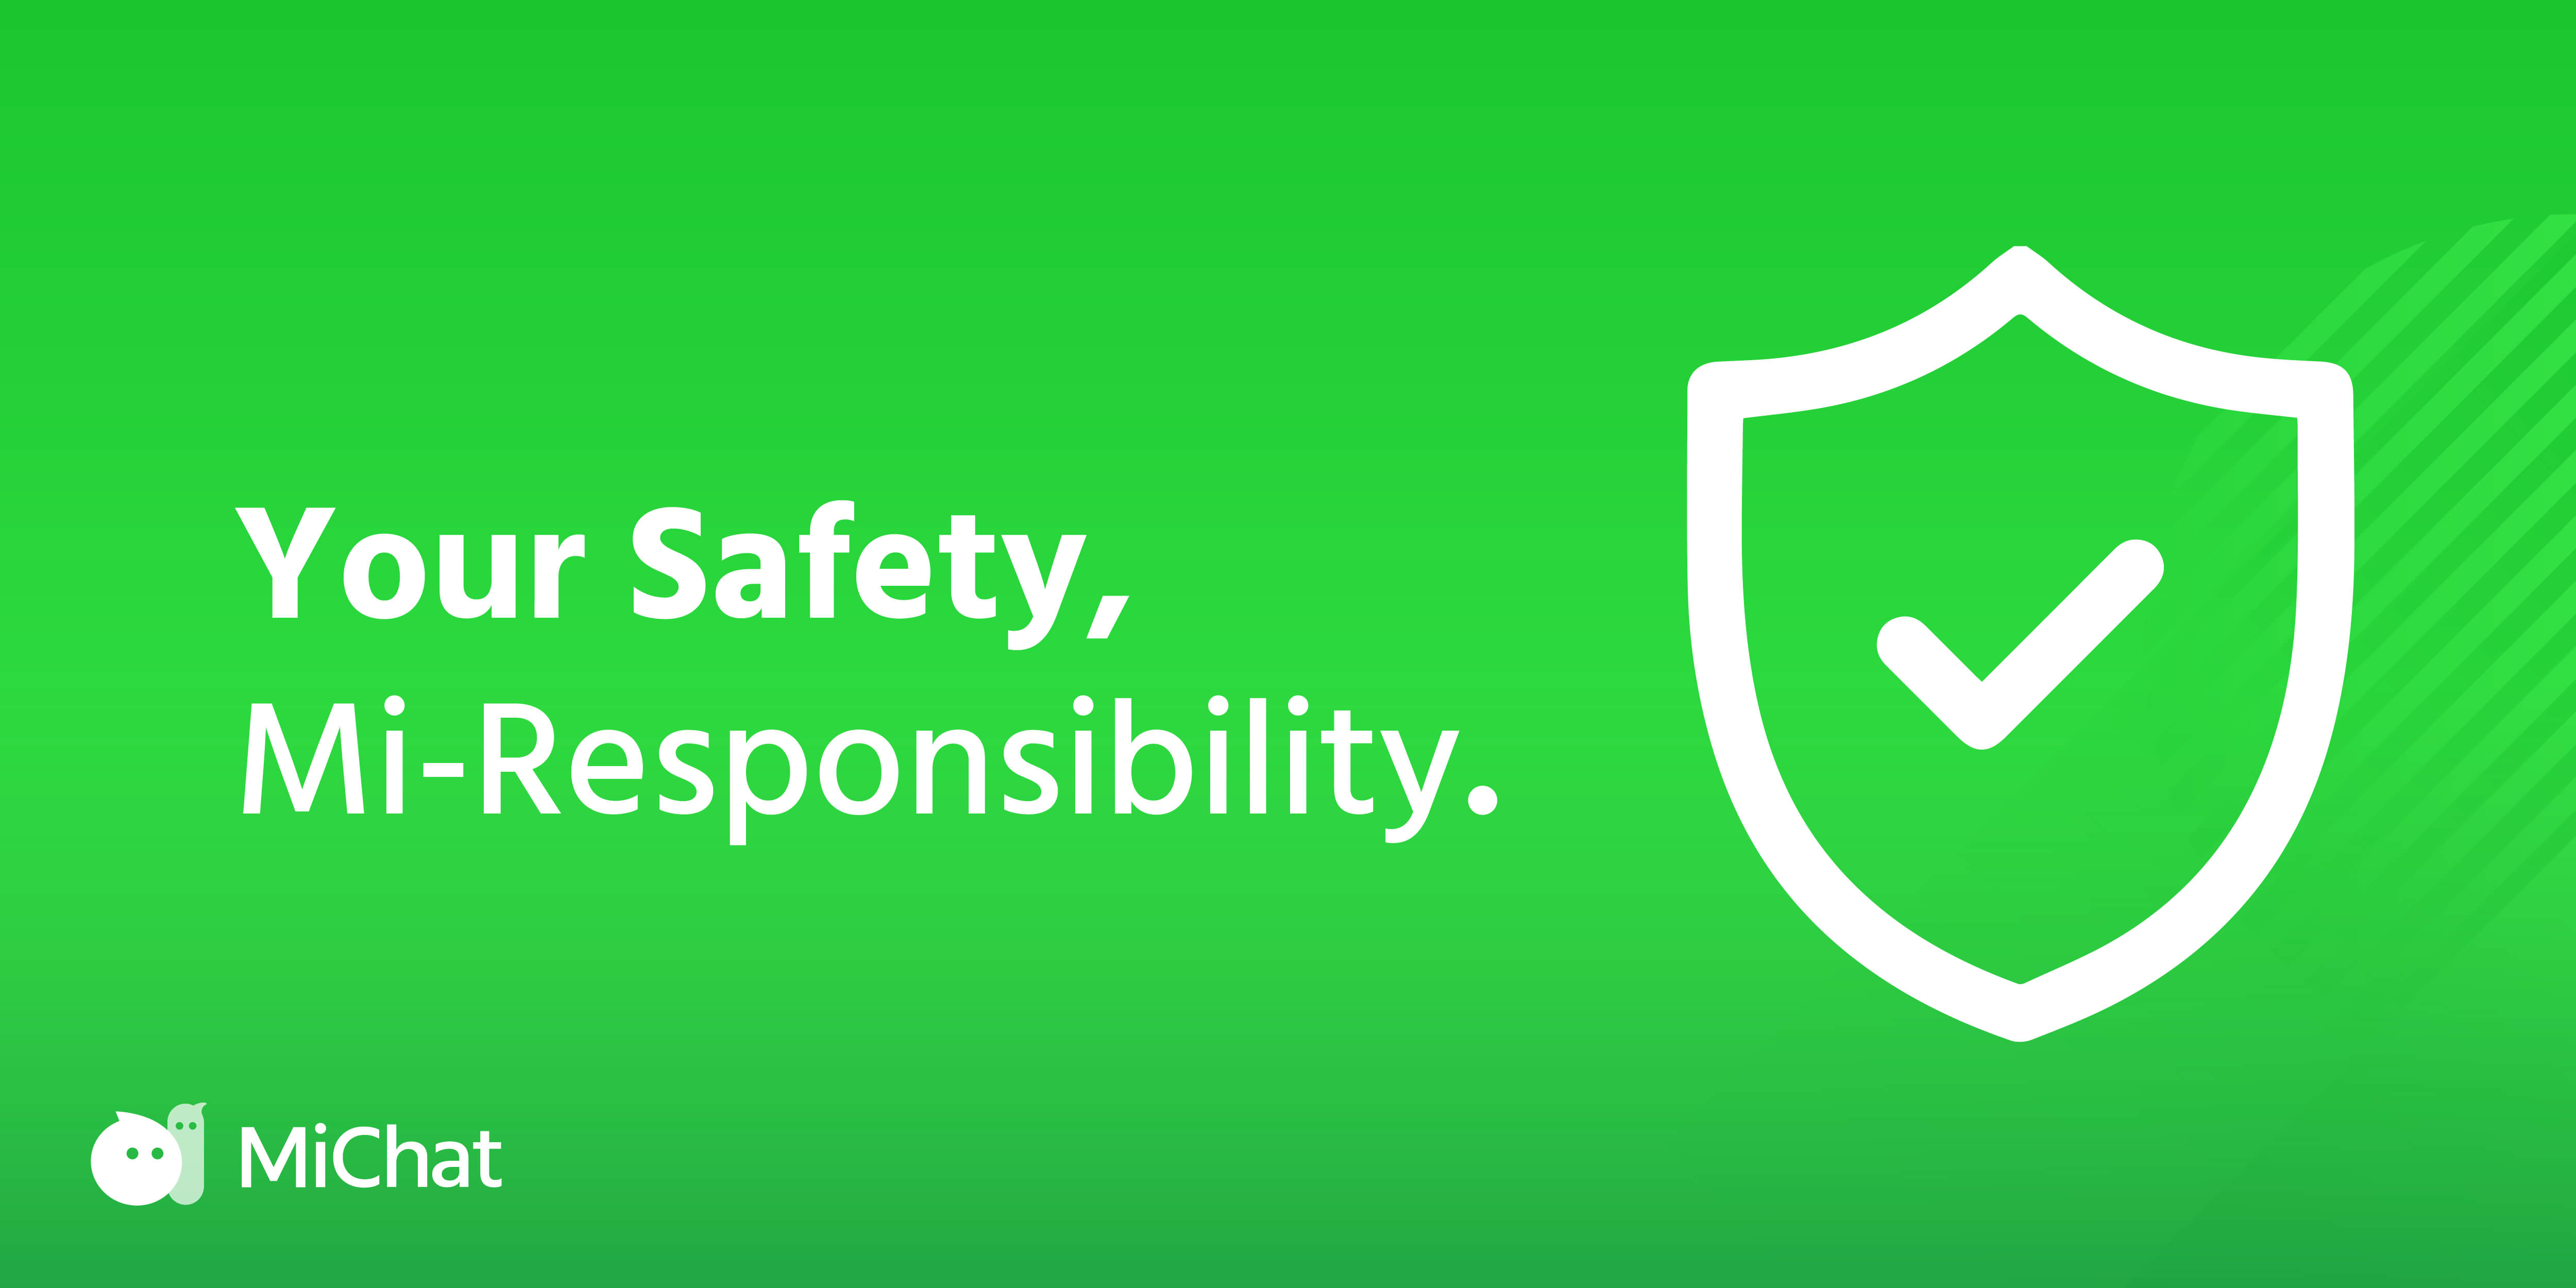 Your Safety, Mi-Responsibility